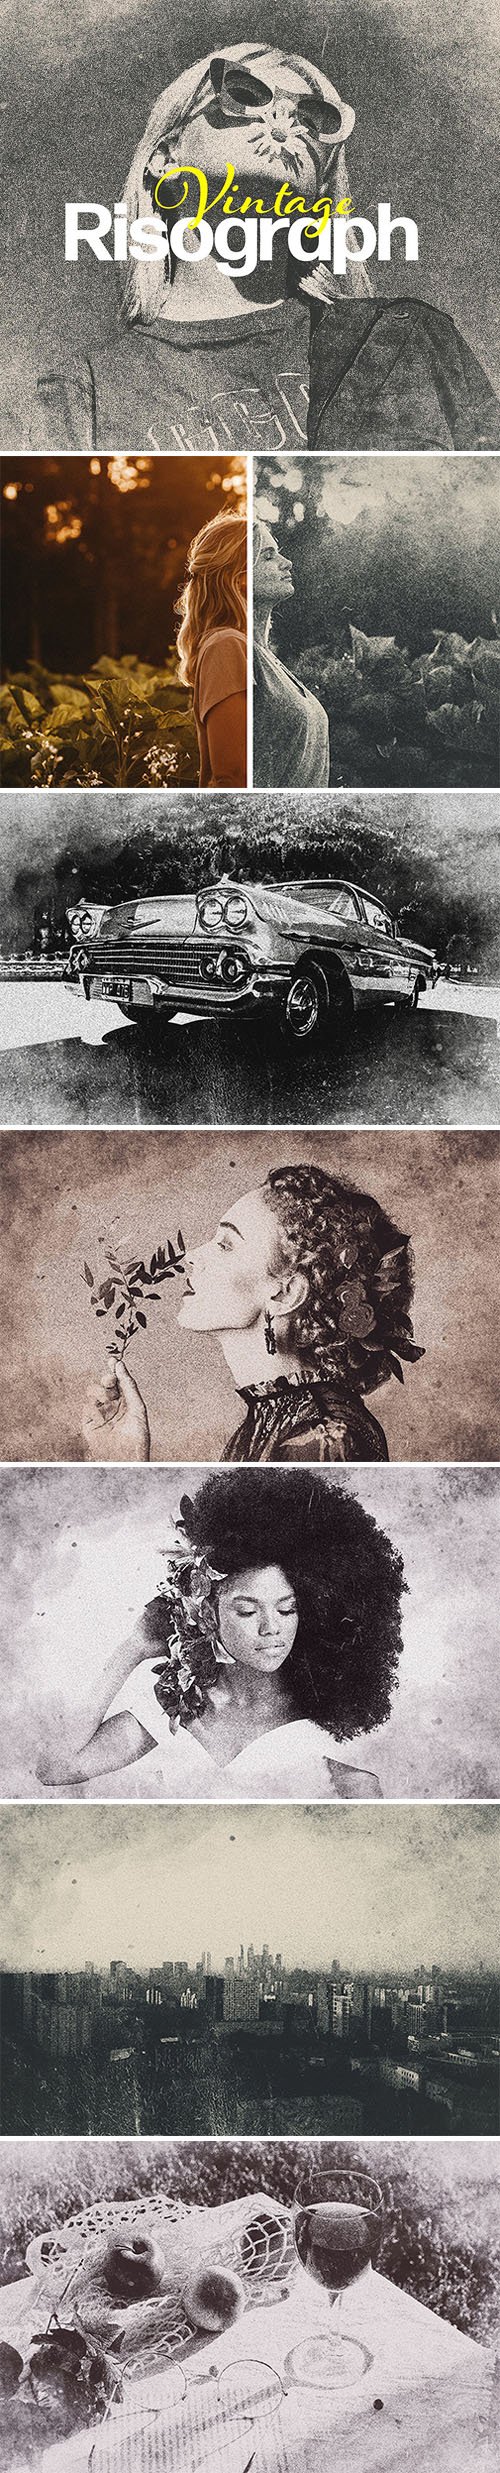 Vintage Risograph - Photoshop Photo Effect Template